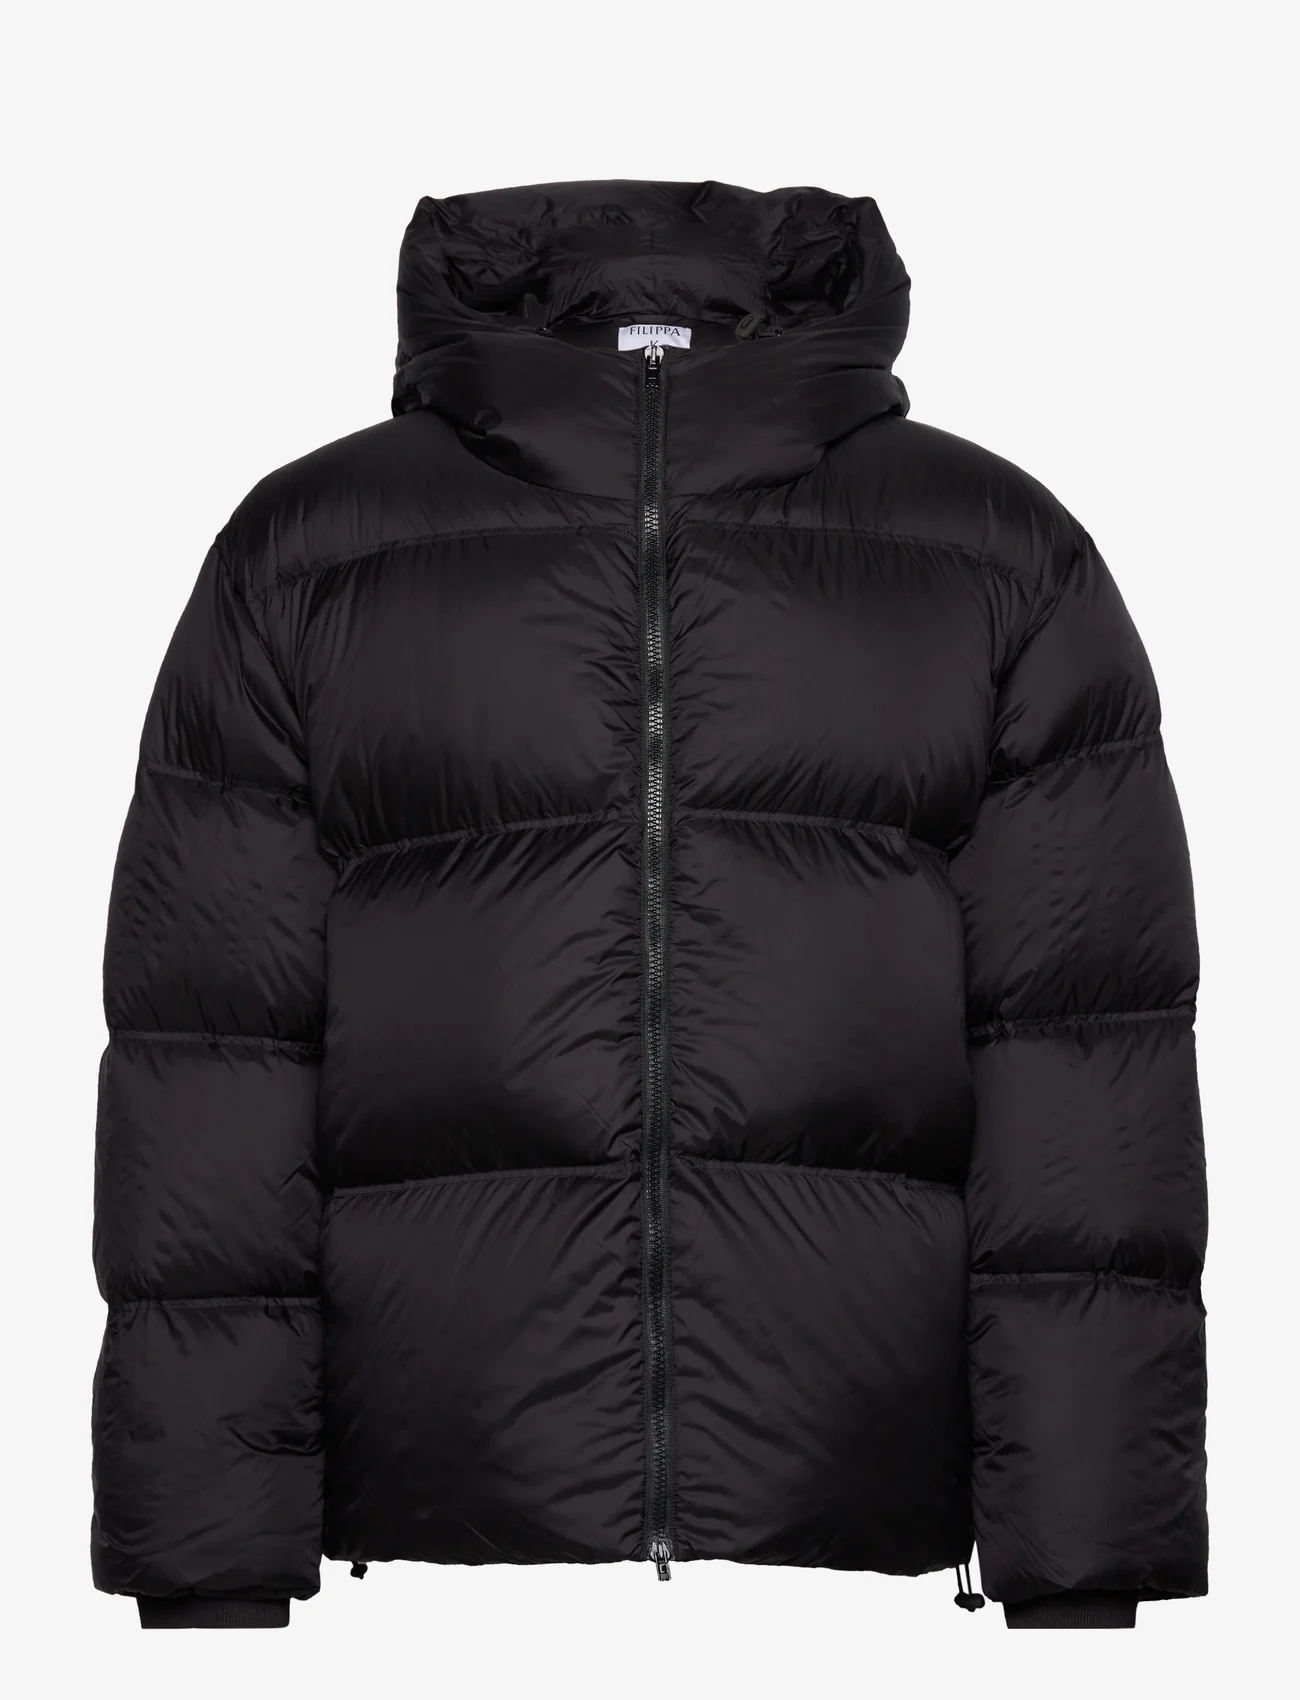 Filippa K - Hooded Puffer Jacket - kurtki zimowe - black - 0